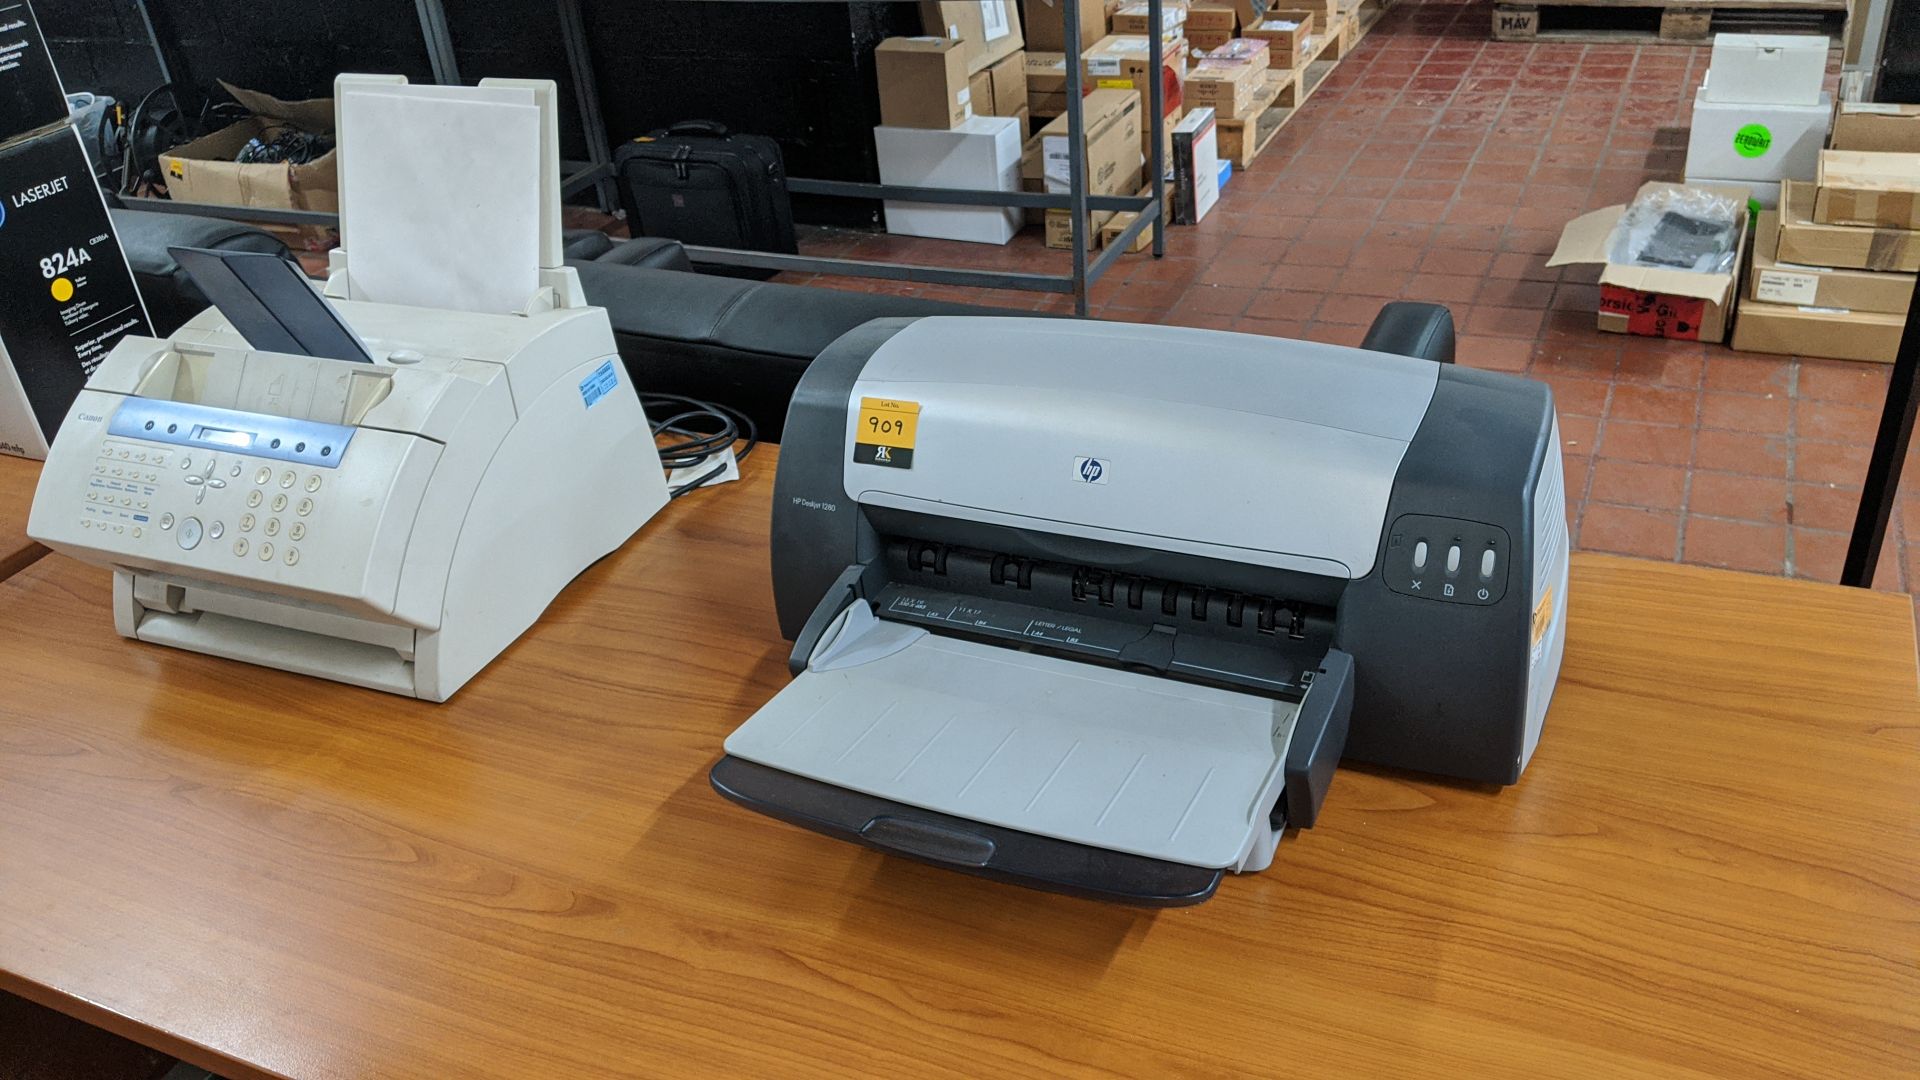 Mixed IT lot comprising HP DeskJet 1280 printer plus Canon Super G3 Fax-L220 fax machine. This is